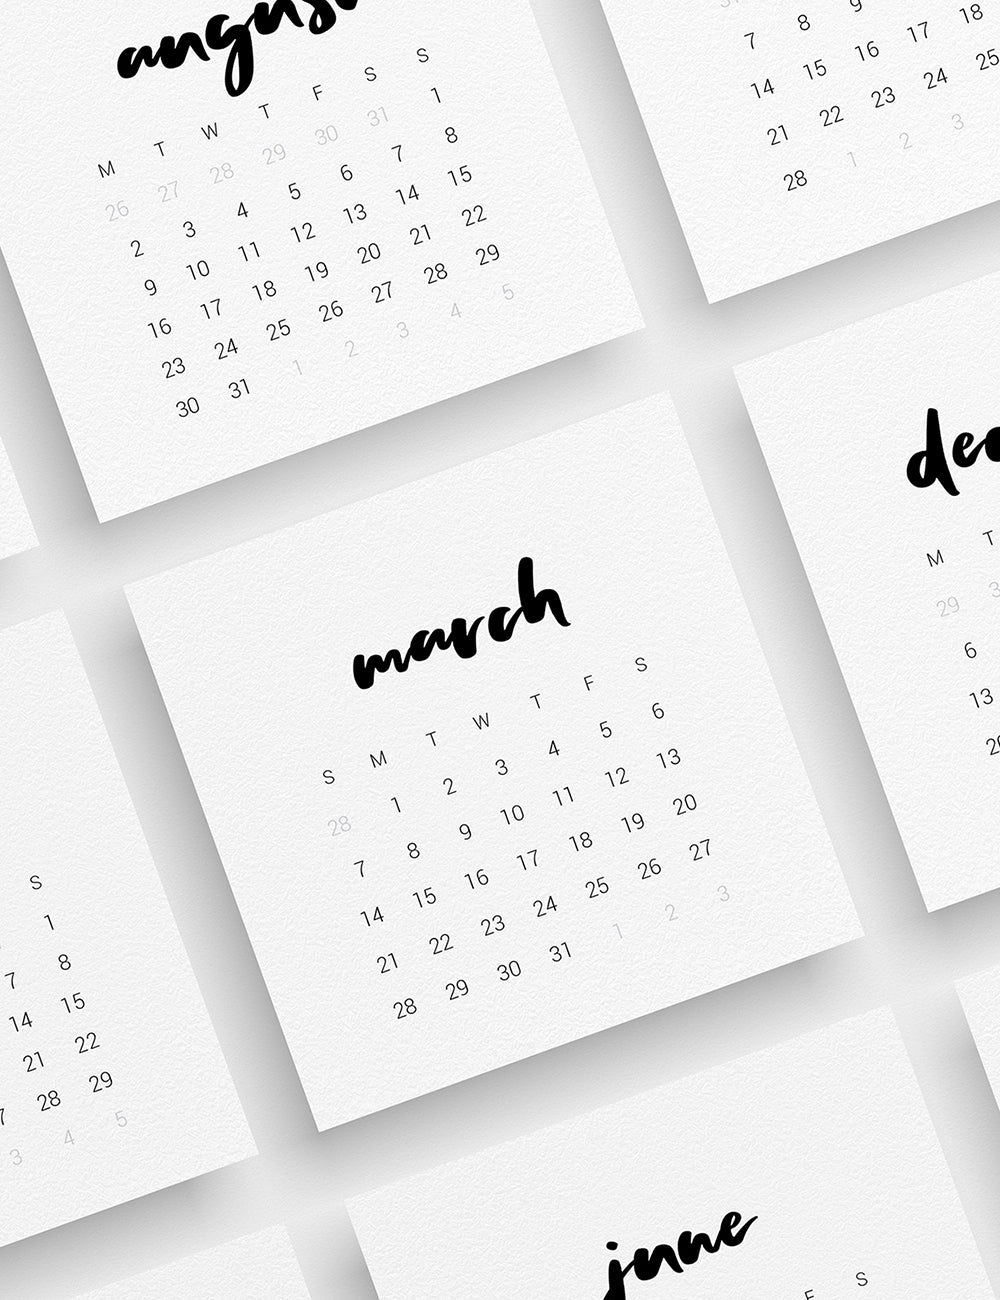 2021 Calendar 3x3 2x2 Printable Journal Planner Cards Minima Paper Moon Art Design